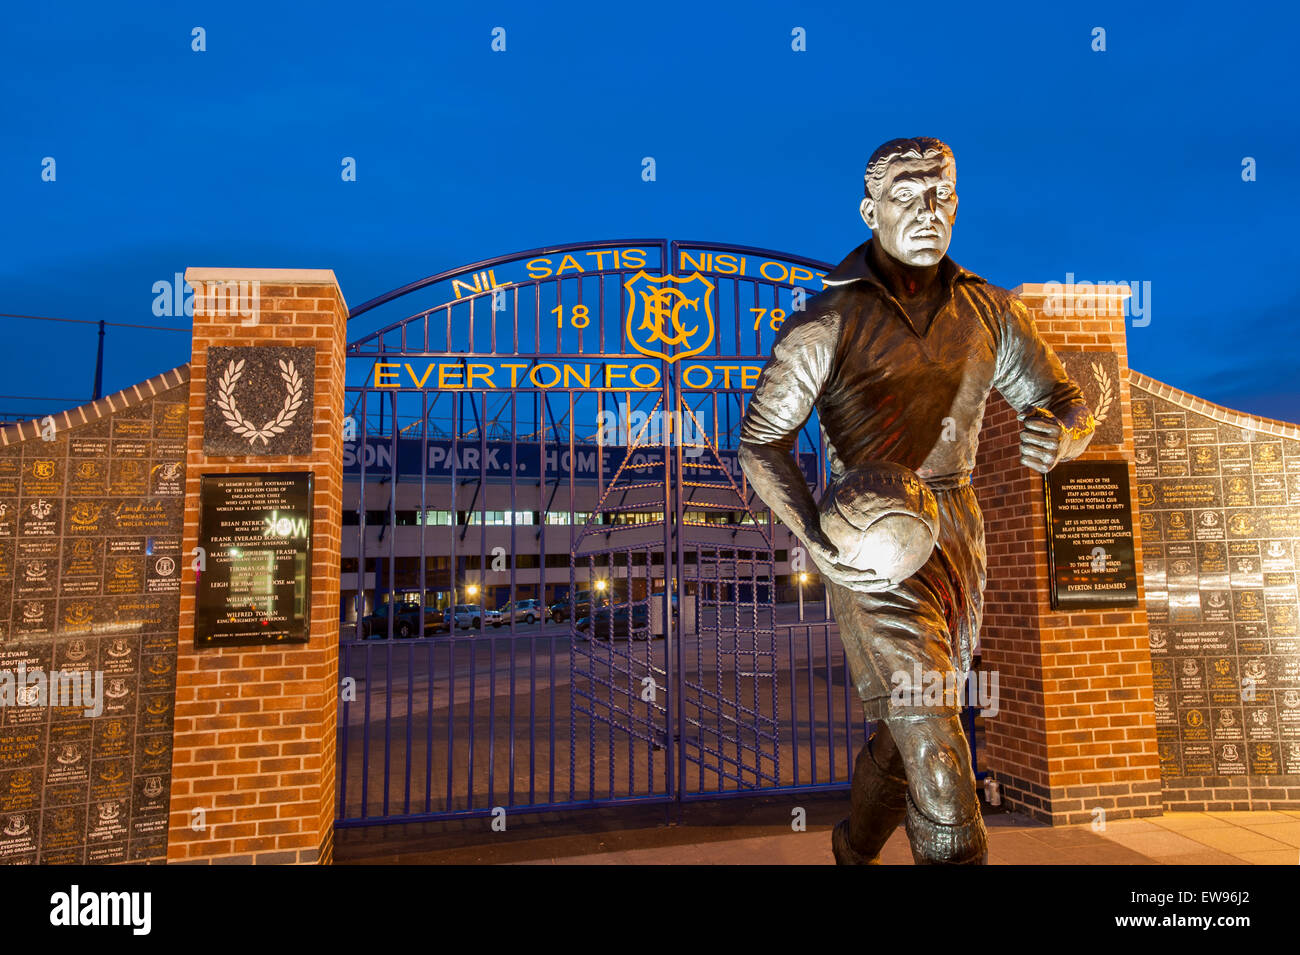 Everton Football Club, Goodison Park, Liverpool, Merseyside UK Banque D'Images